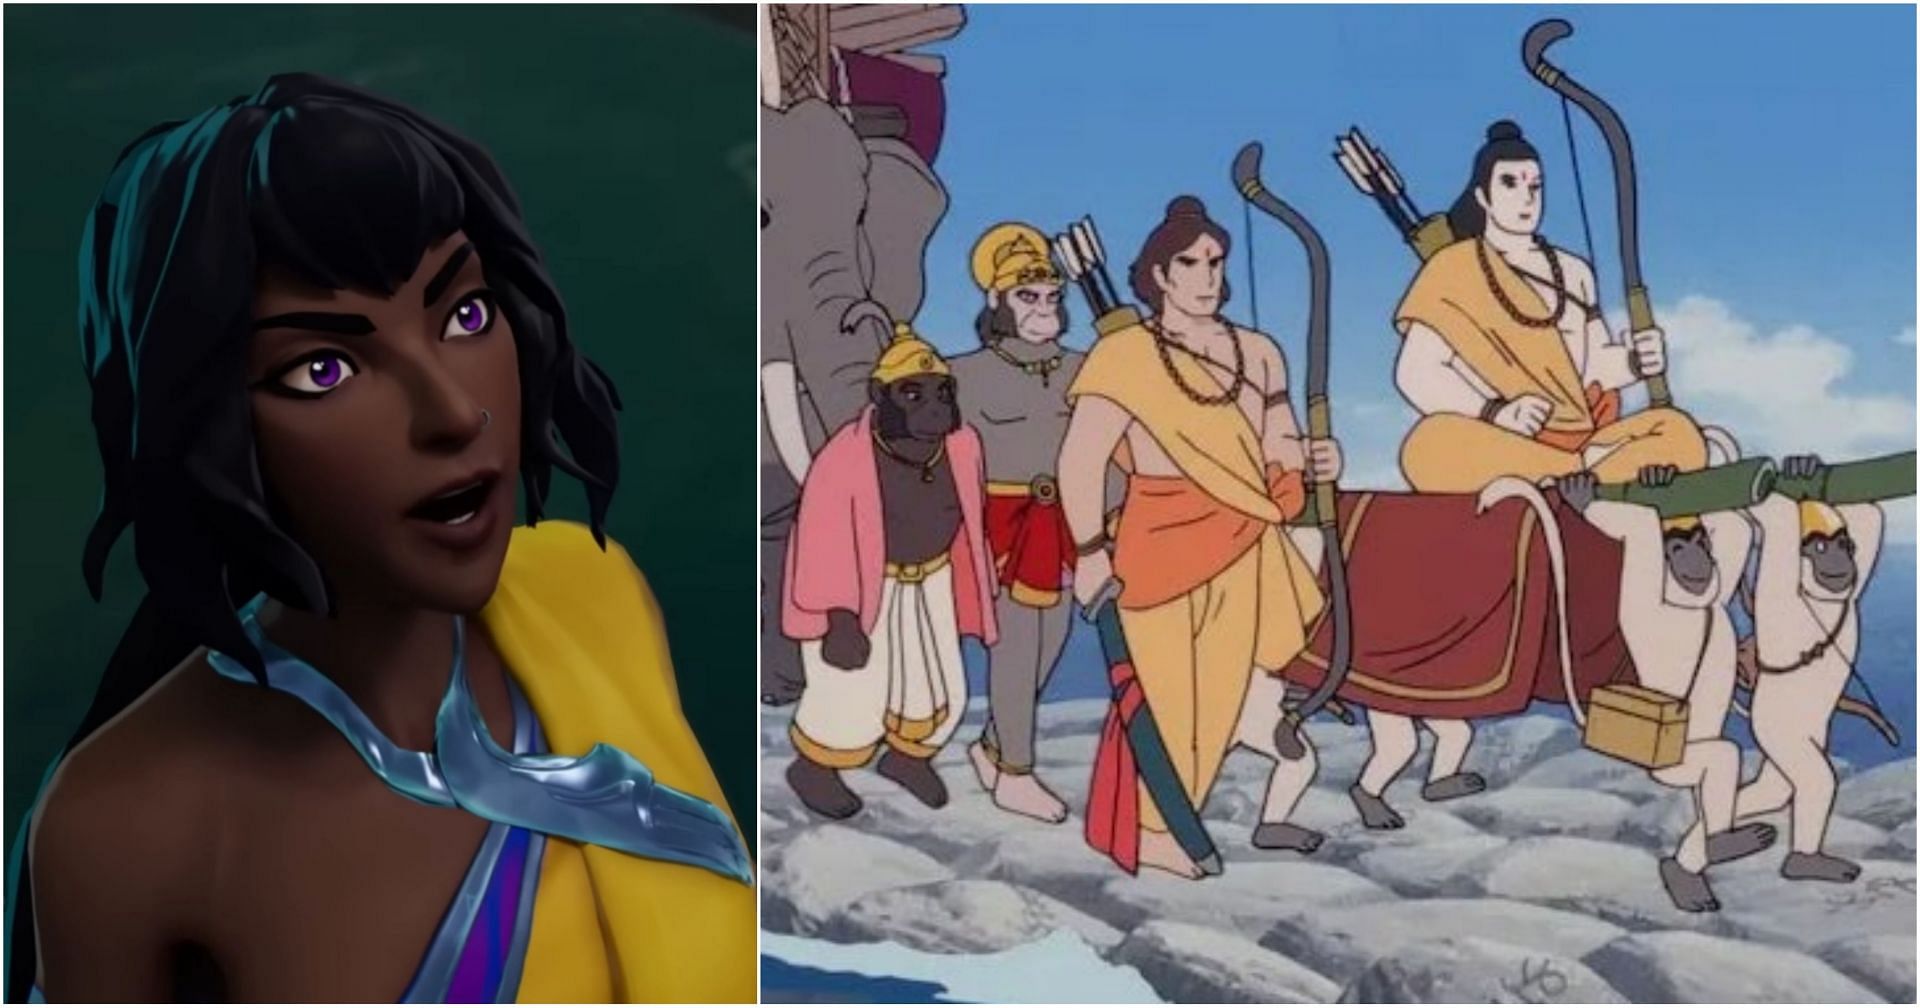 Riot&#039;s Principal Narrative Writer confirmed that Nilah draws inspiration from ancient Indian mythology of Ramayana (Images via Riot Games and Nippon Ramayana Film Co.)